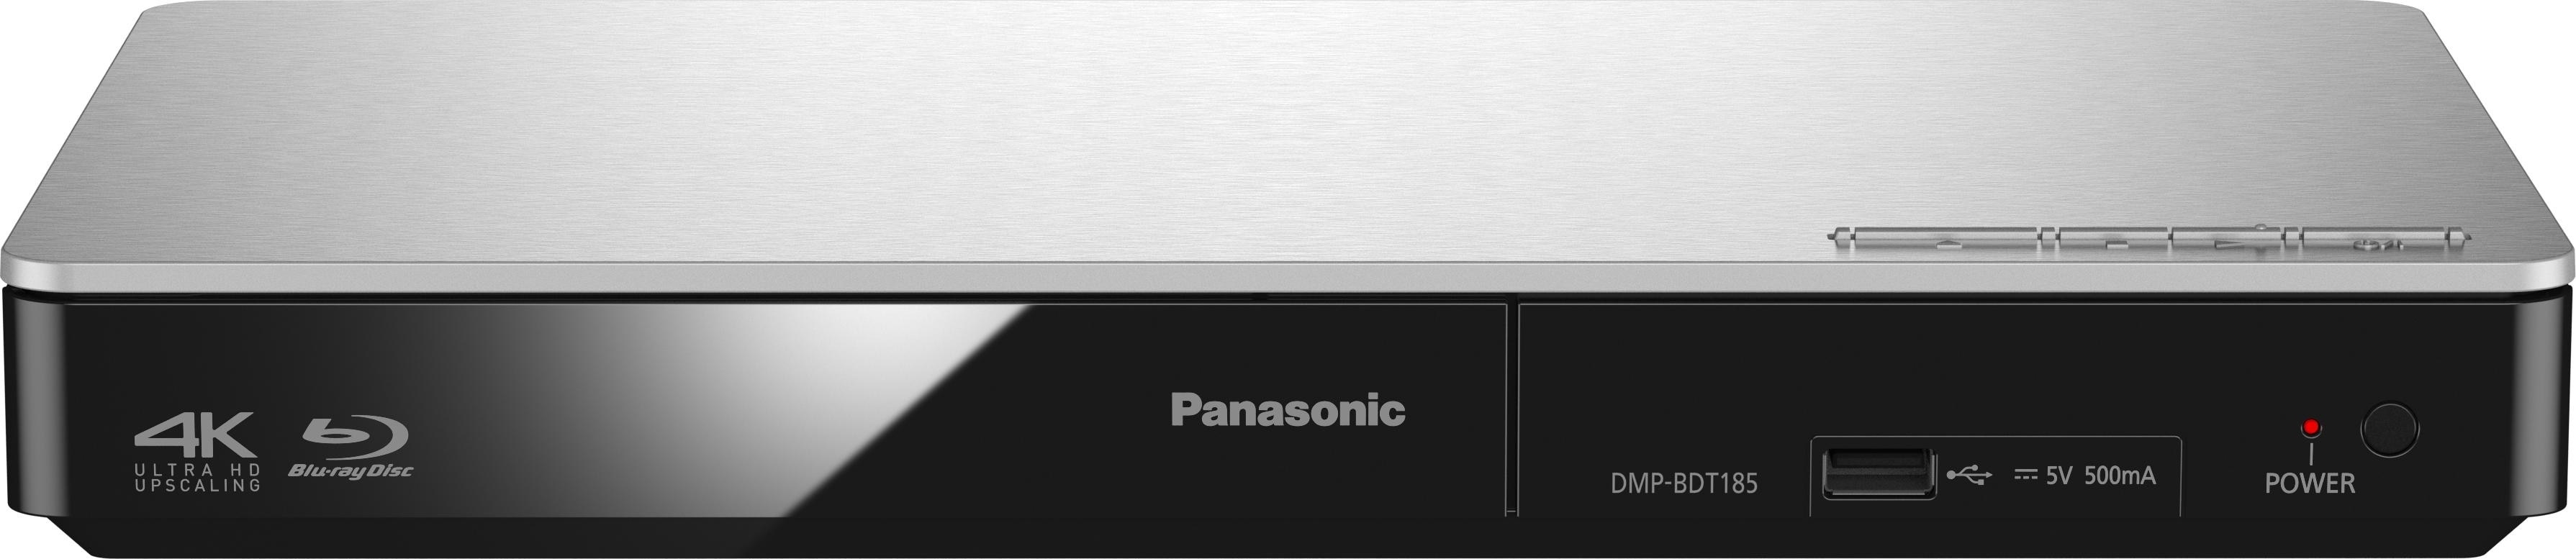 Panasonic DMP-BDT185 (Blu-ray Player), Bluray + DVD Player, Silber